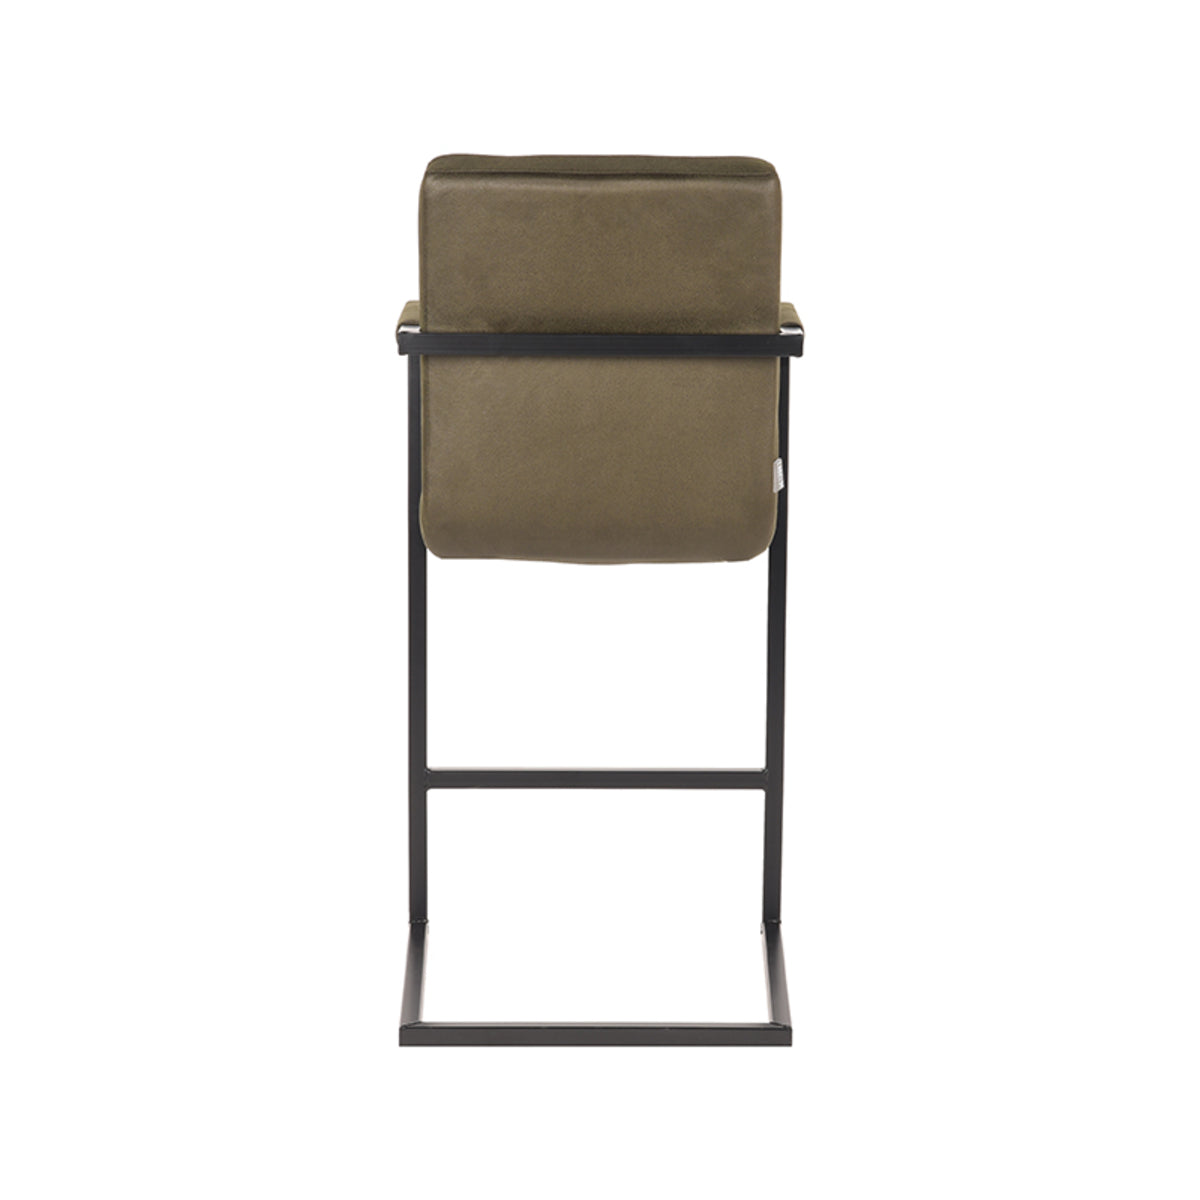 LABEL51 Bar stool Denmark - Army green - Microfiber -